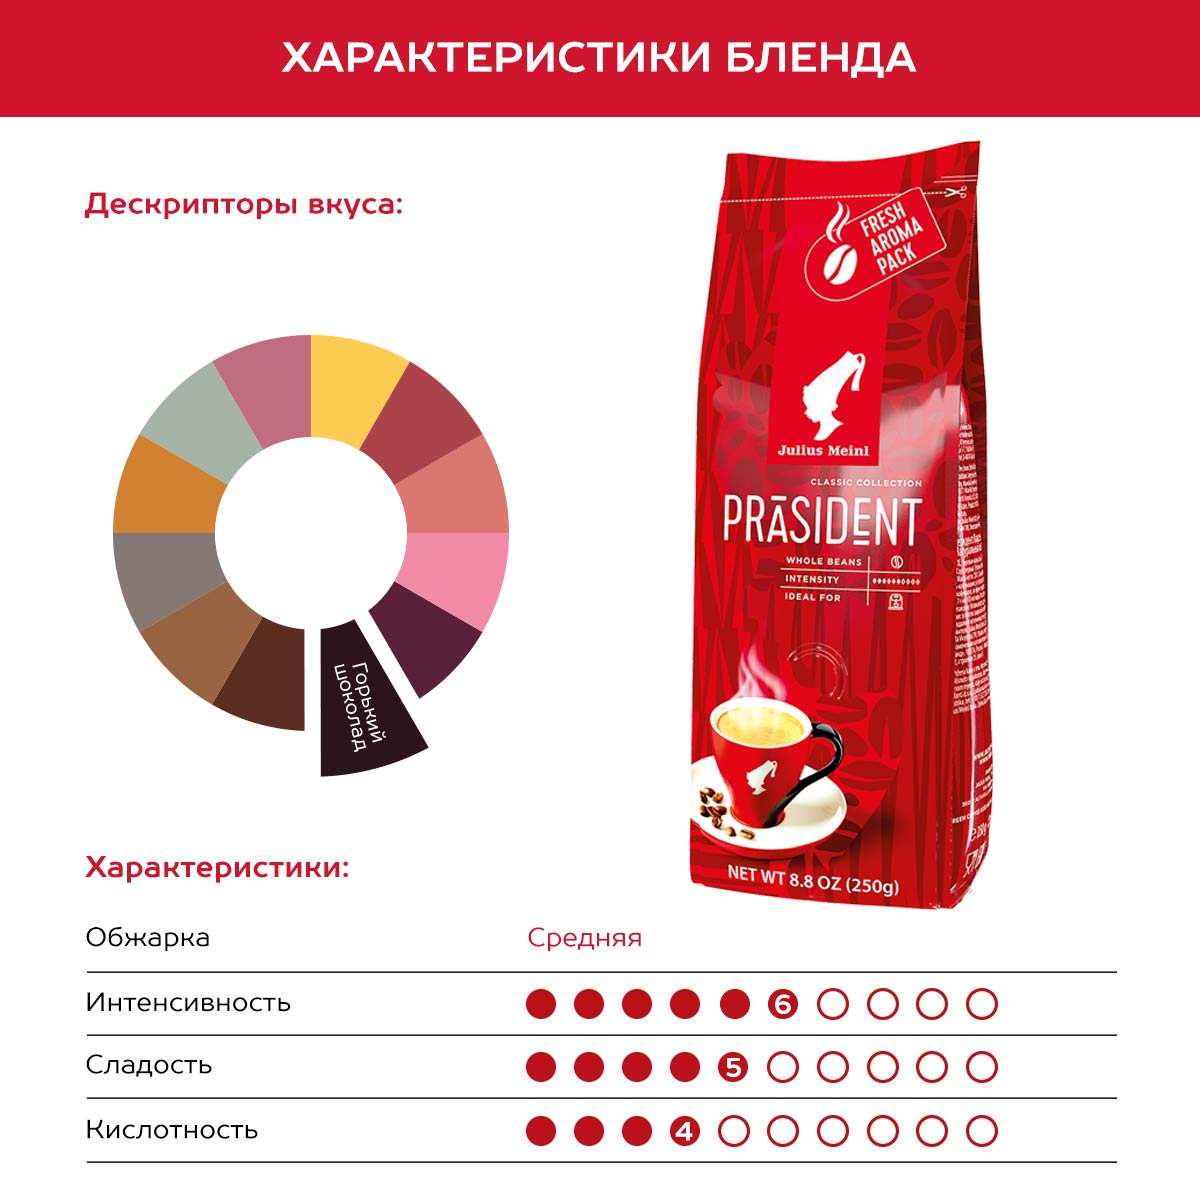 Кофе в зернах Julius Meinl Президент Prasident 250 г средняя обжарка - фото 3